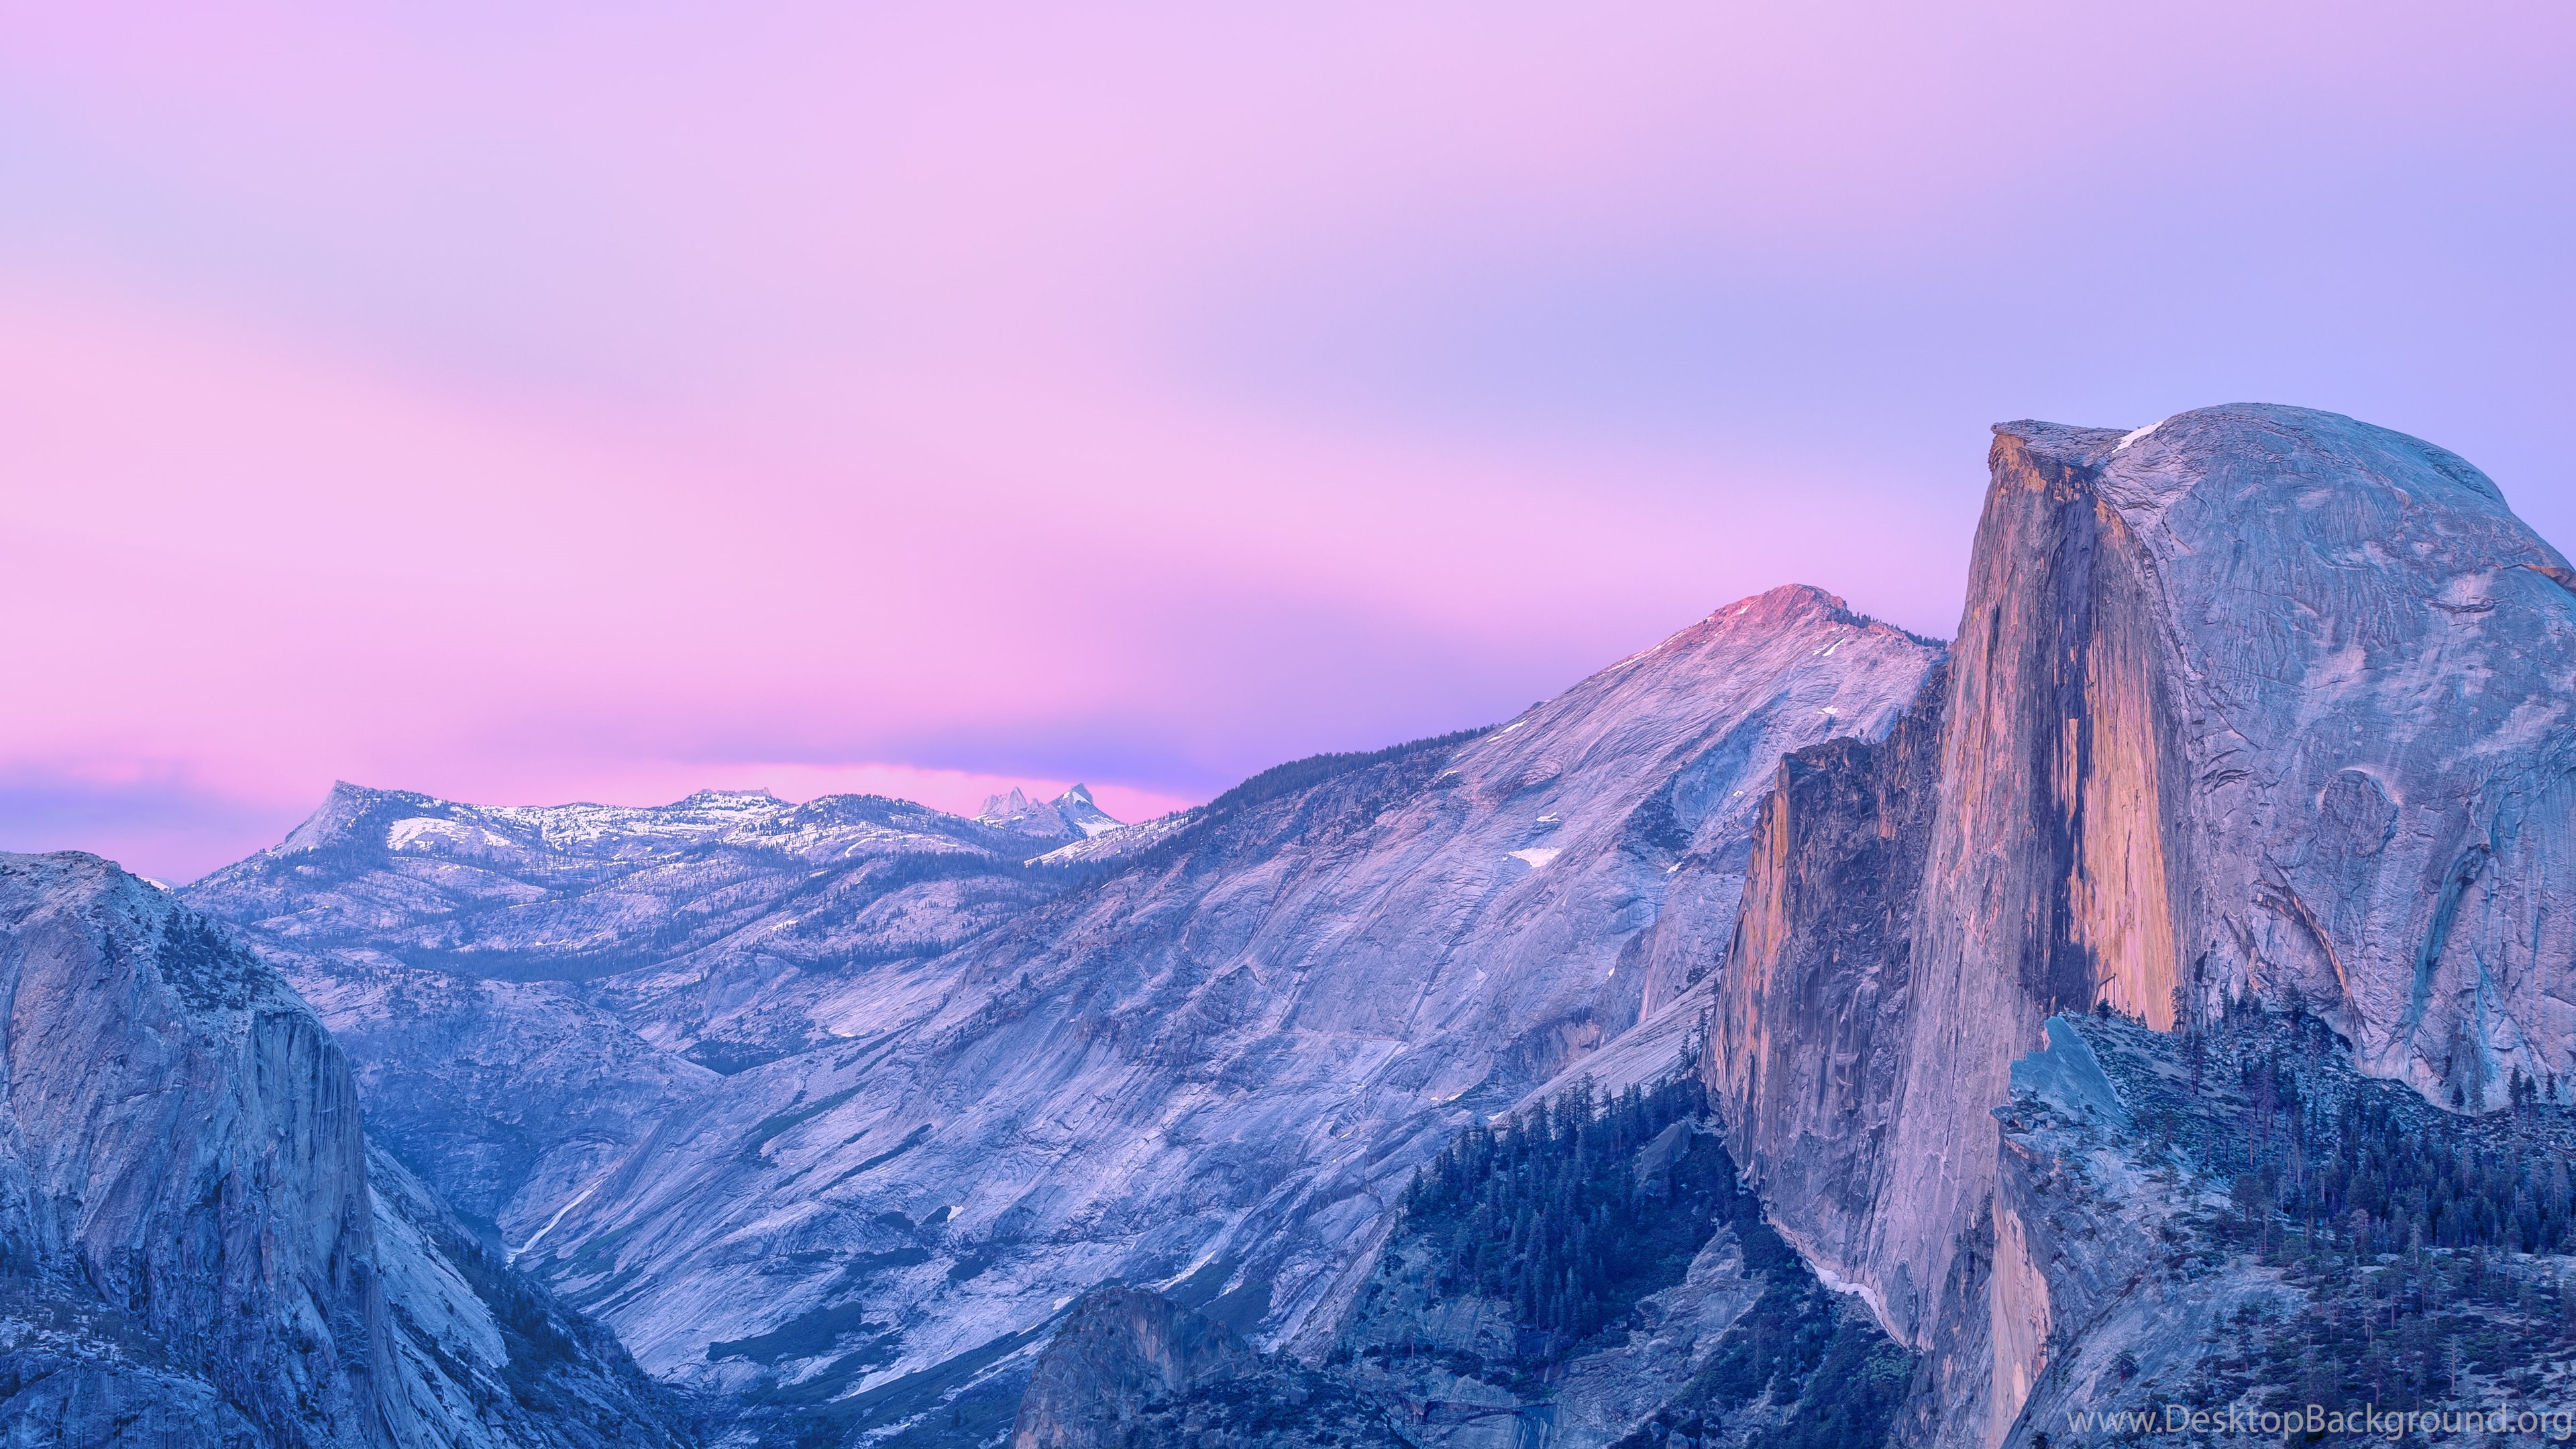 HD Apple Mac OS X Yosemite Wallpapers Ultra HD Full Size ... Desktop Backgrounds